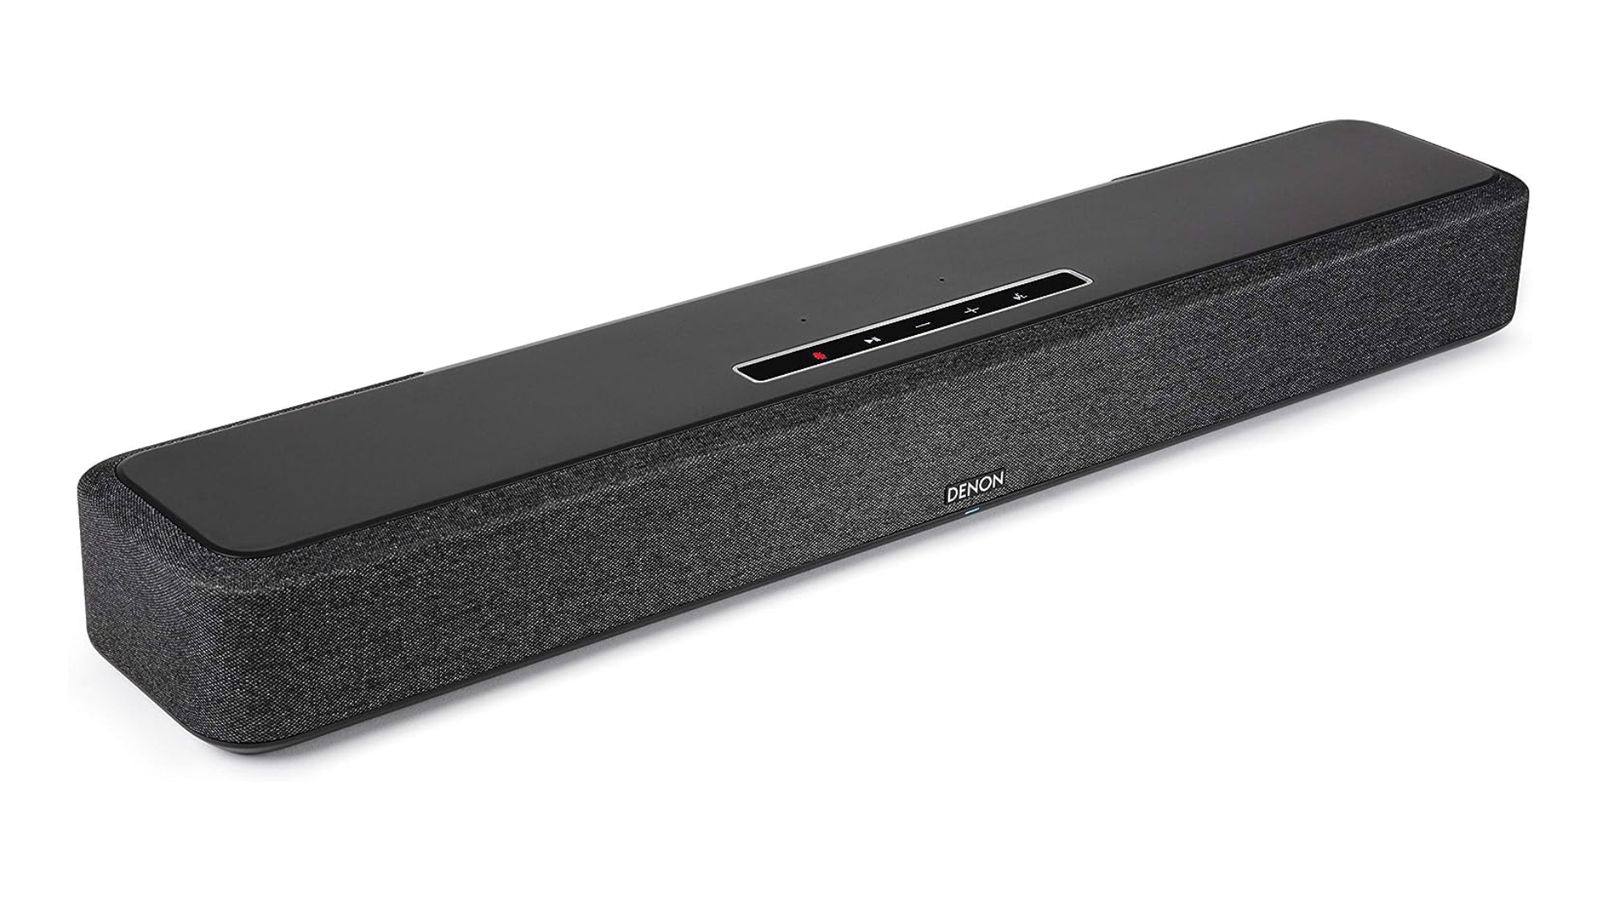 Denon Home Sound Bar 550 product image of a black compact soundbar.